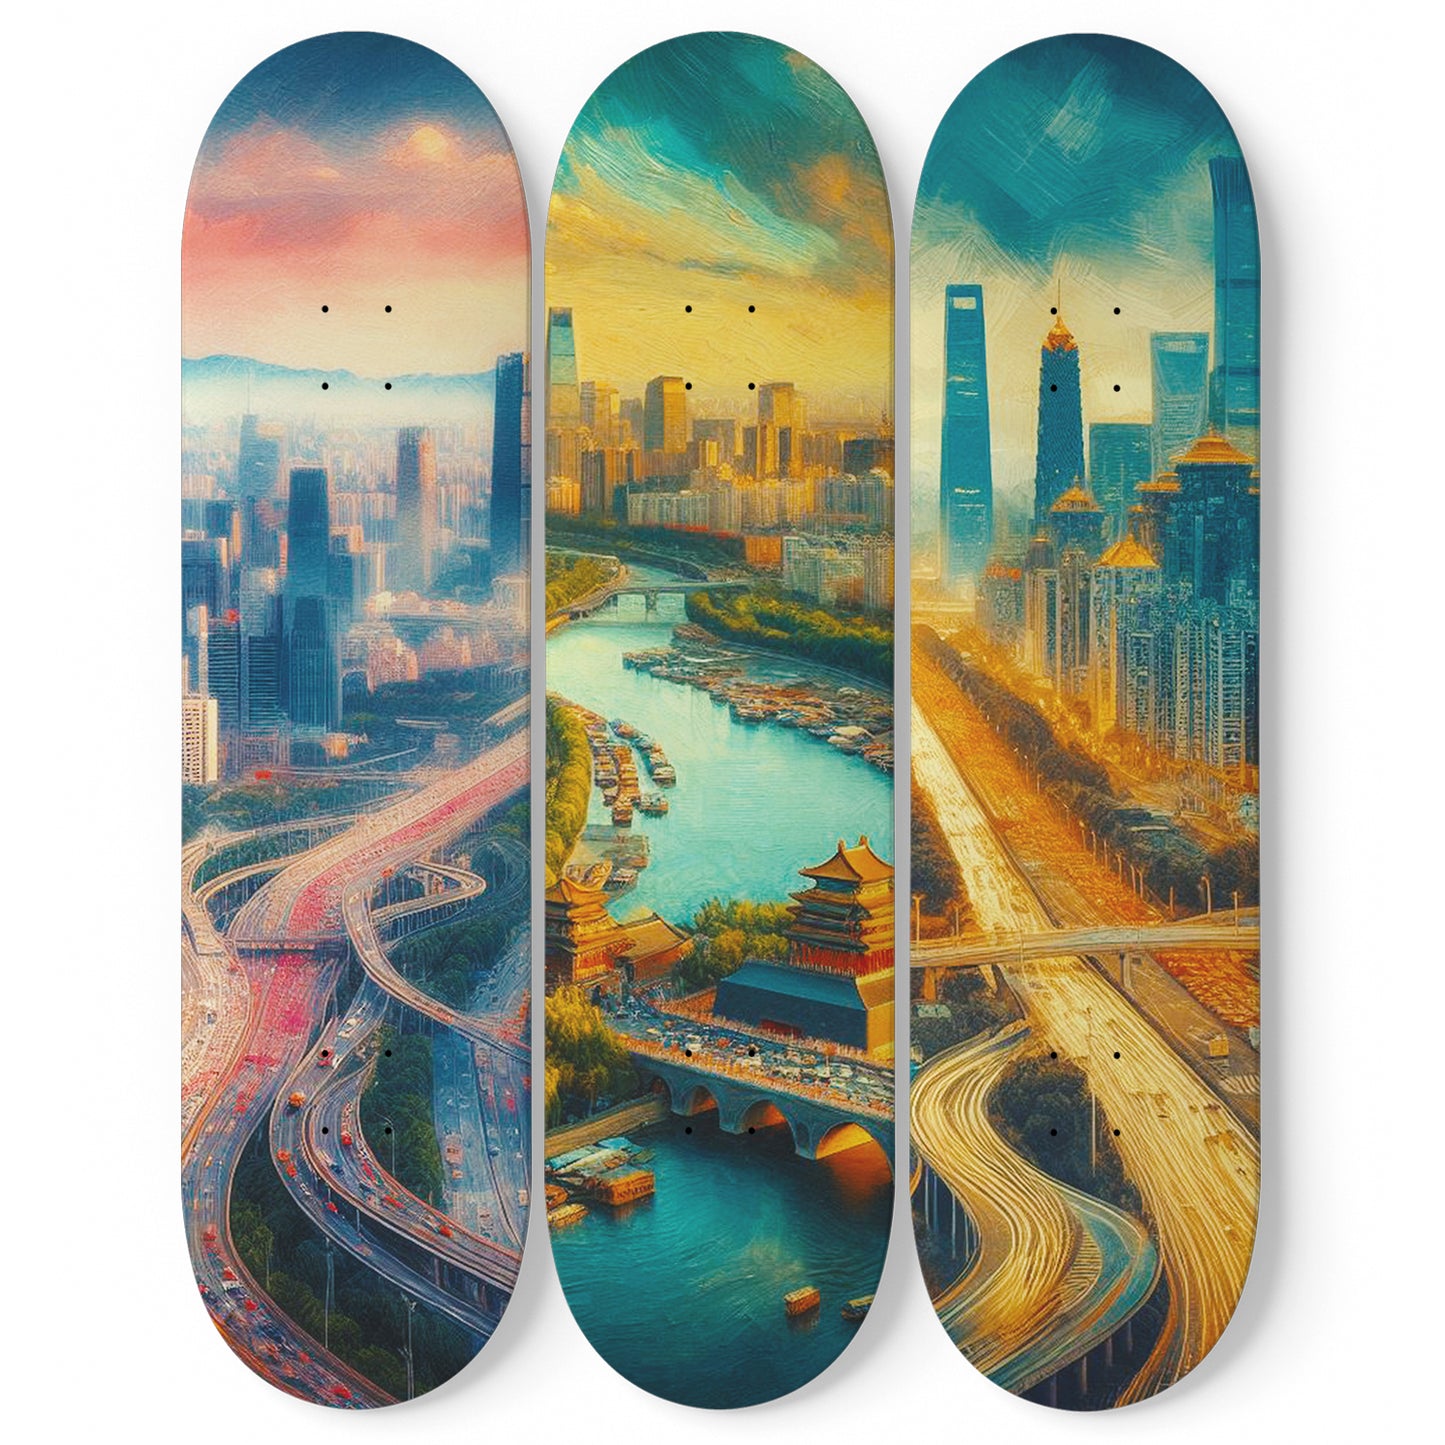 Beijing Cityscaper 3-Deck Skateboard Wall Art